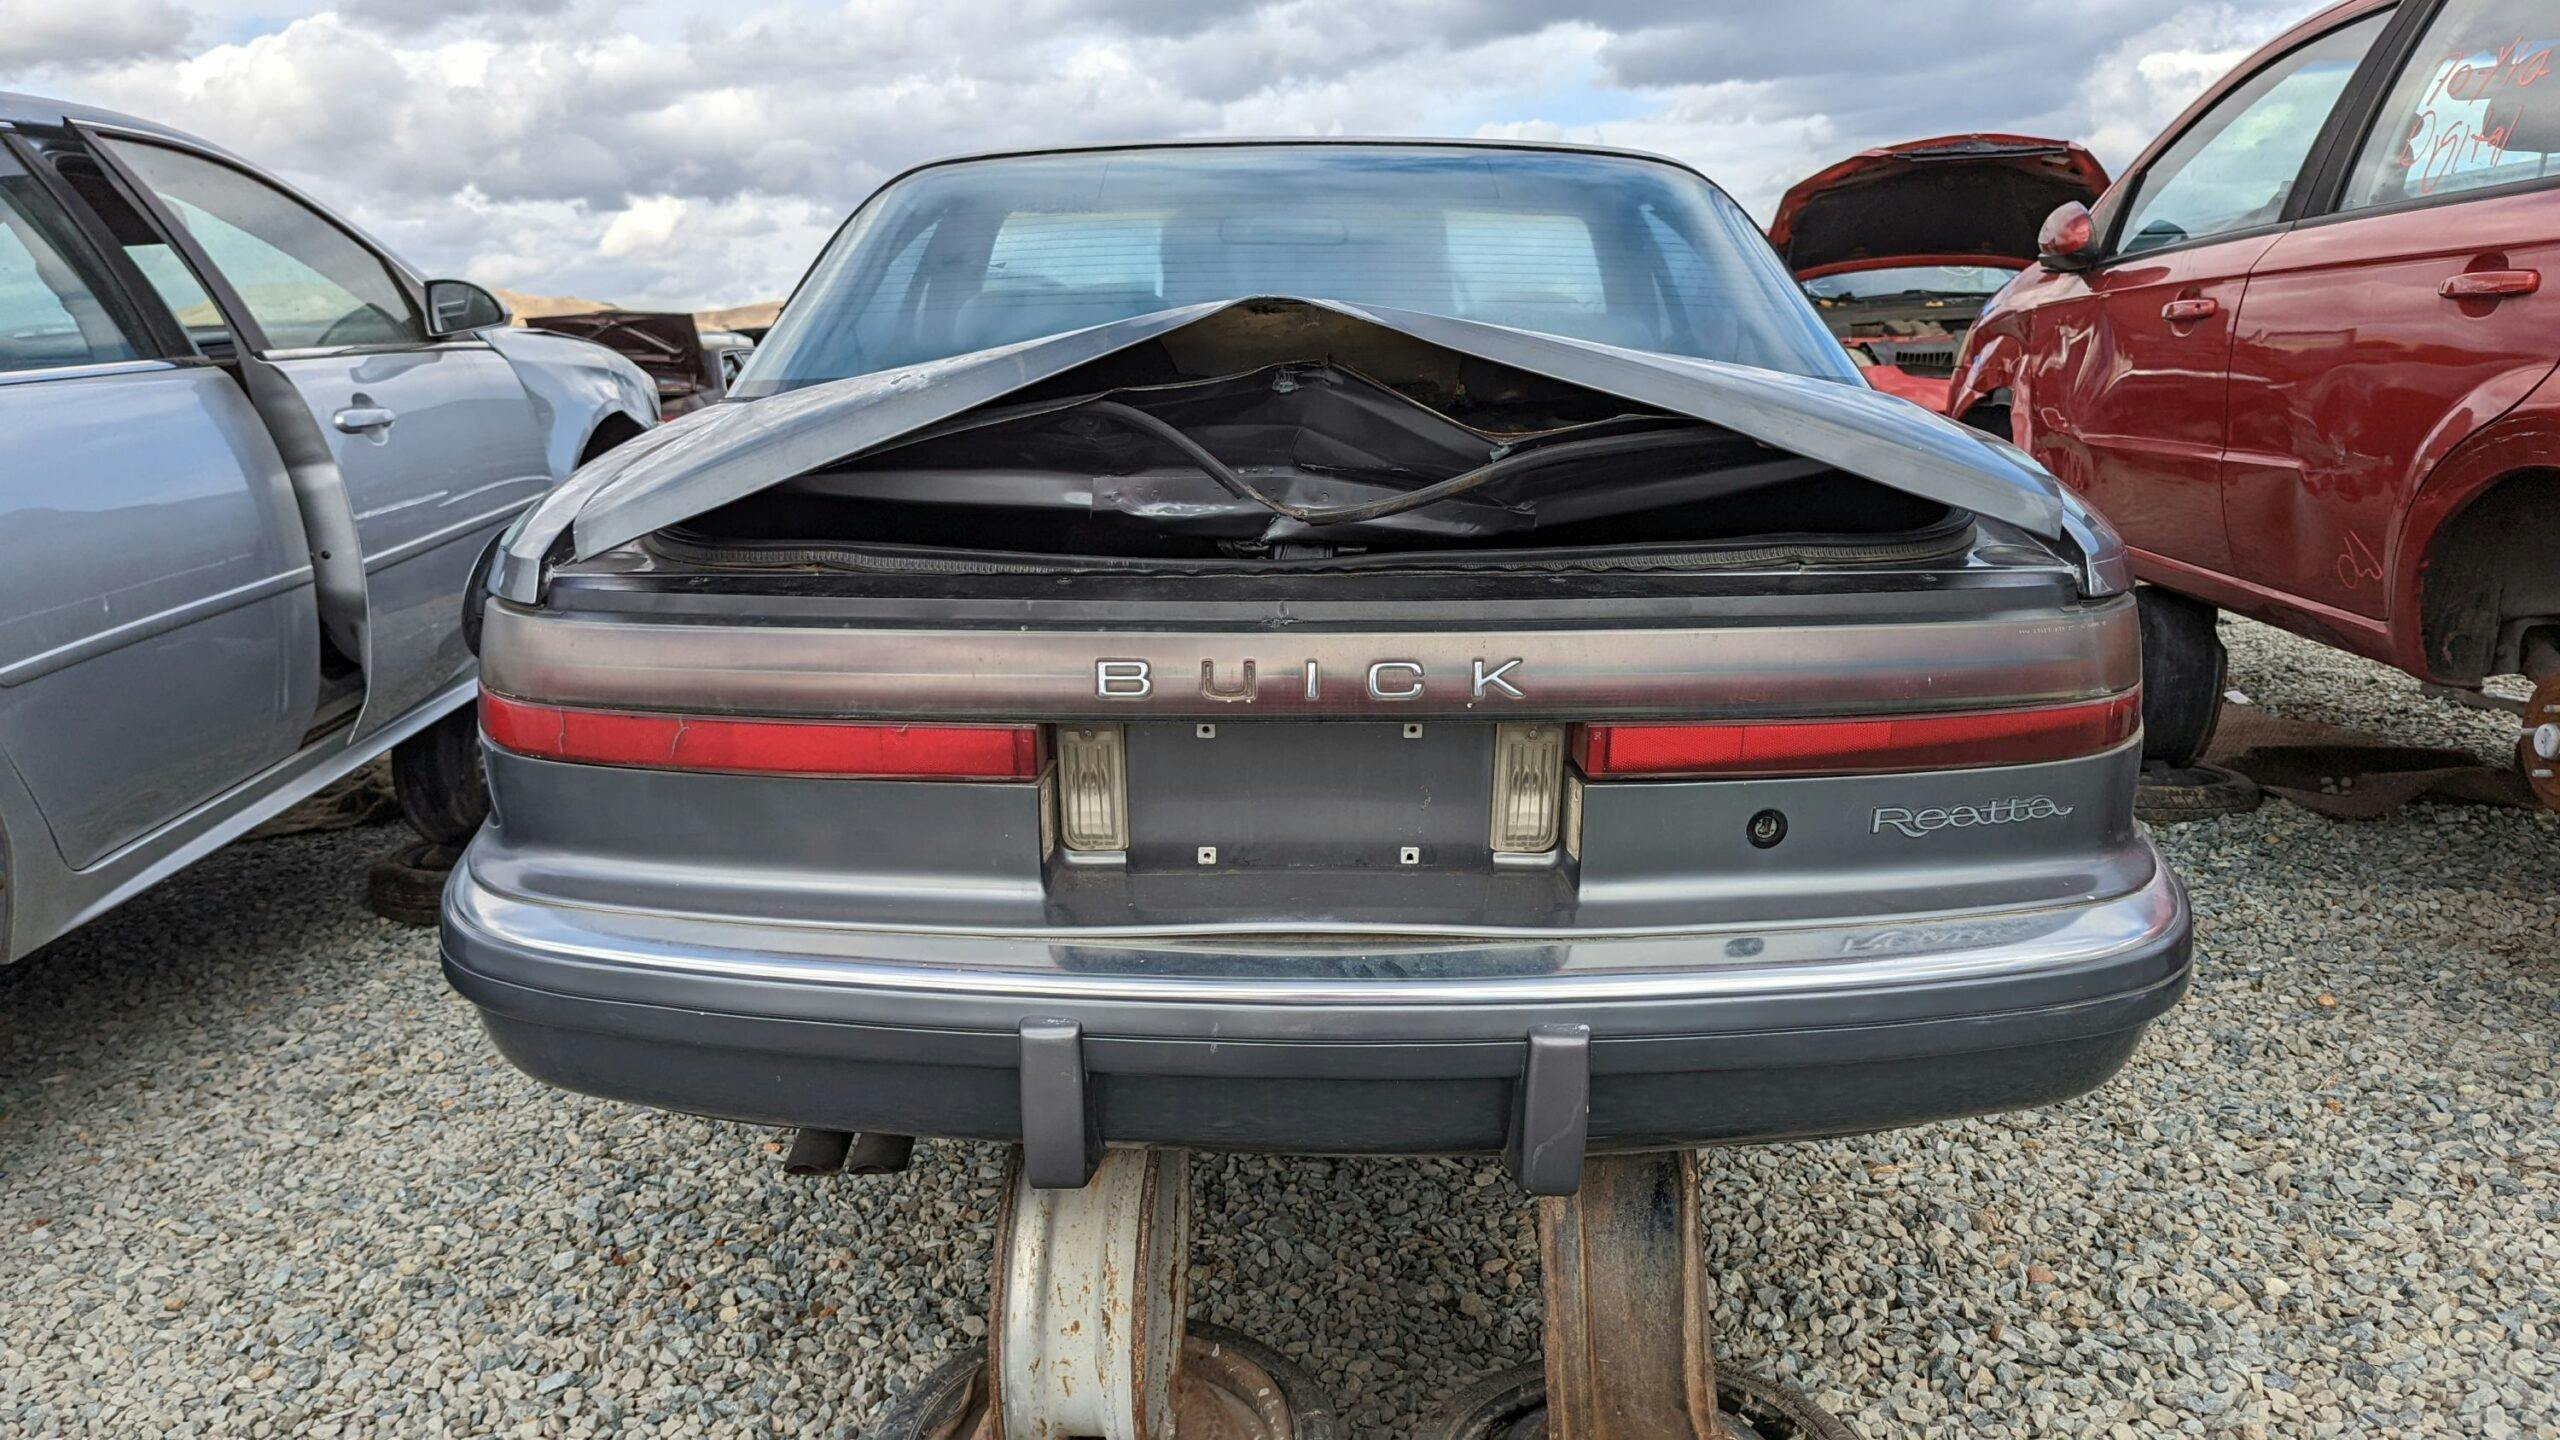 1989 Buick Reatta rear trunk damage